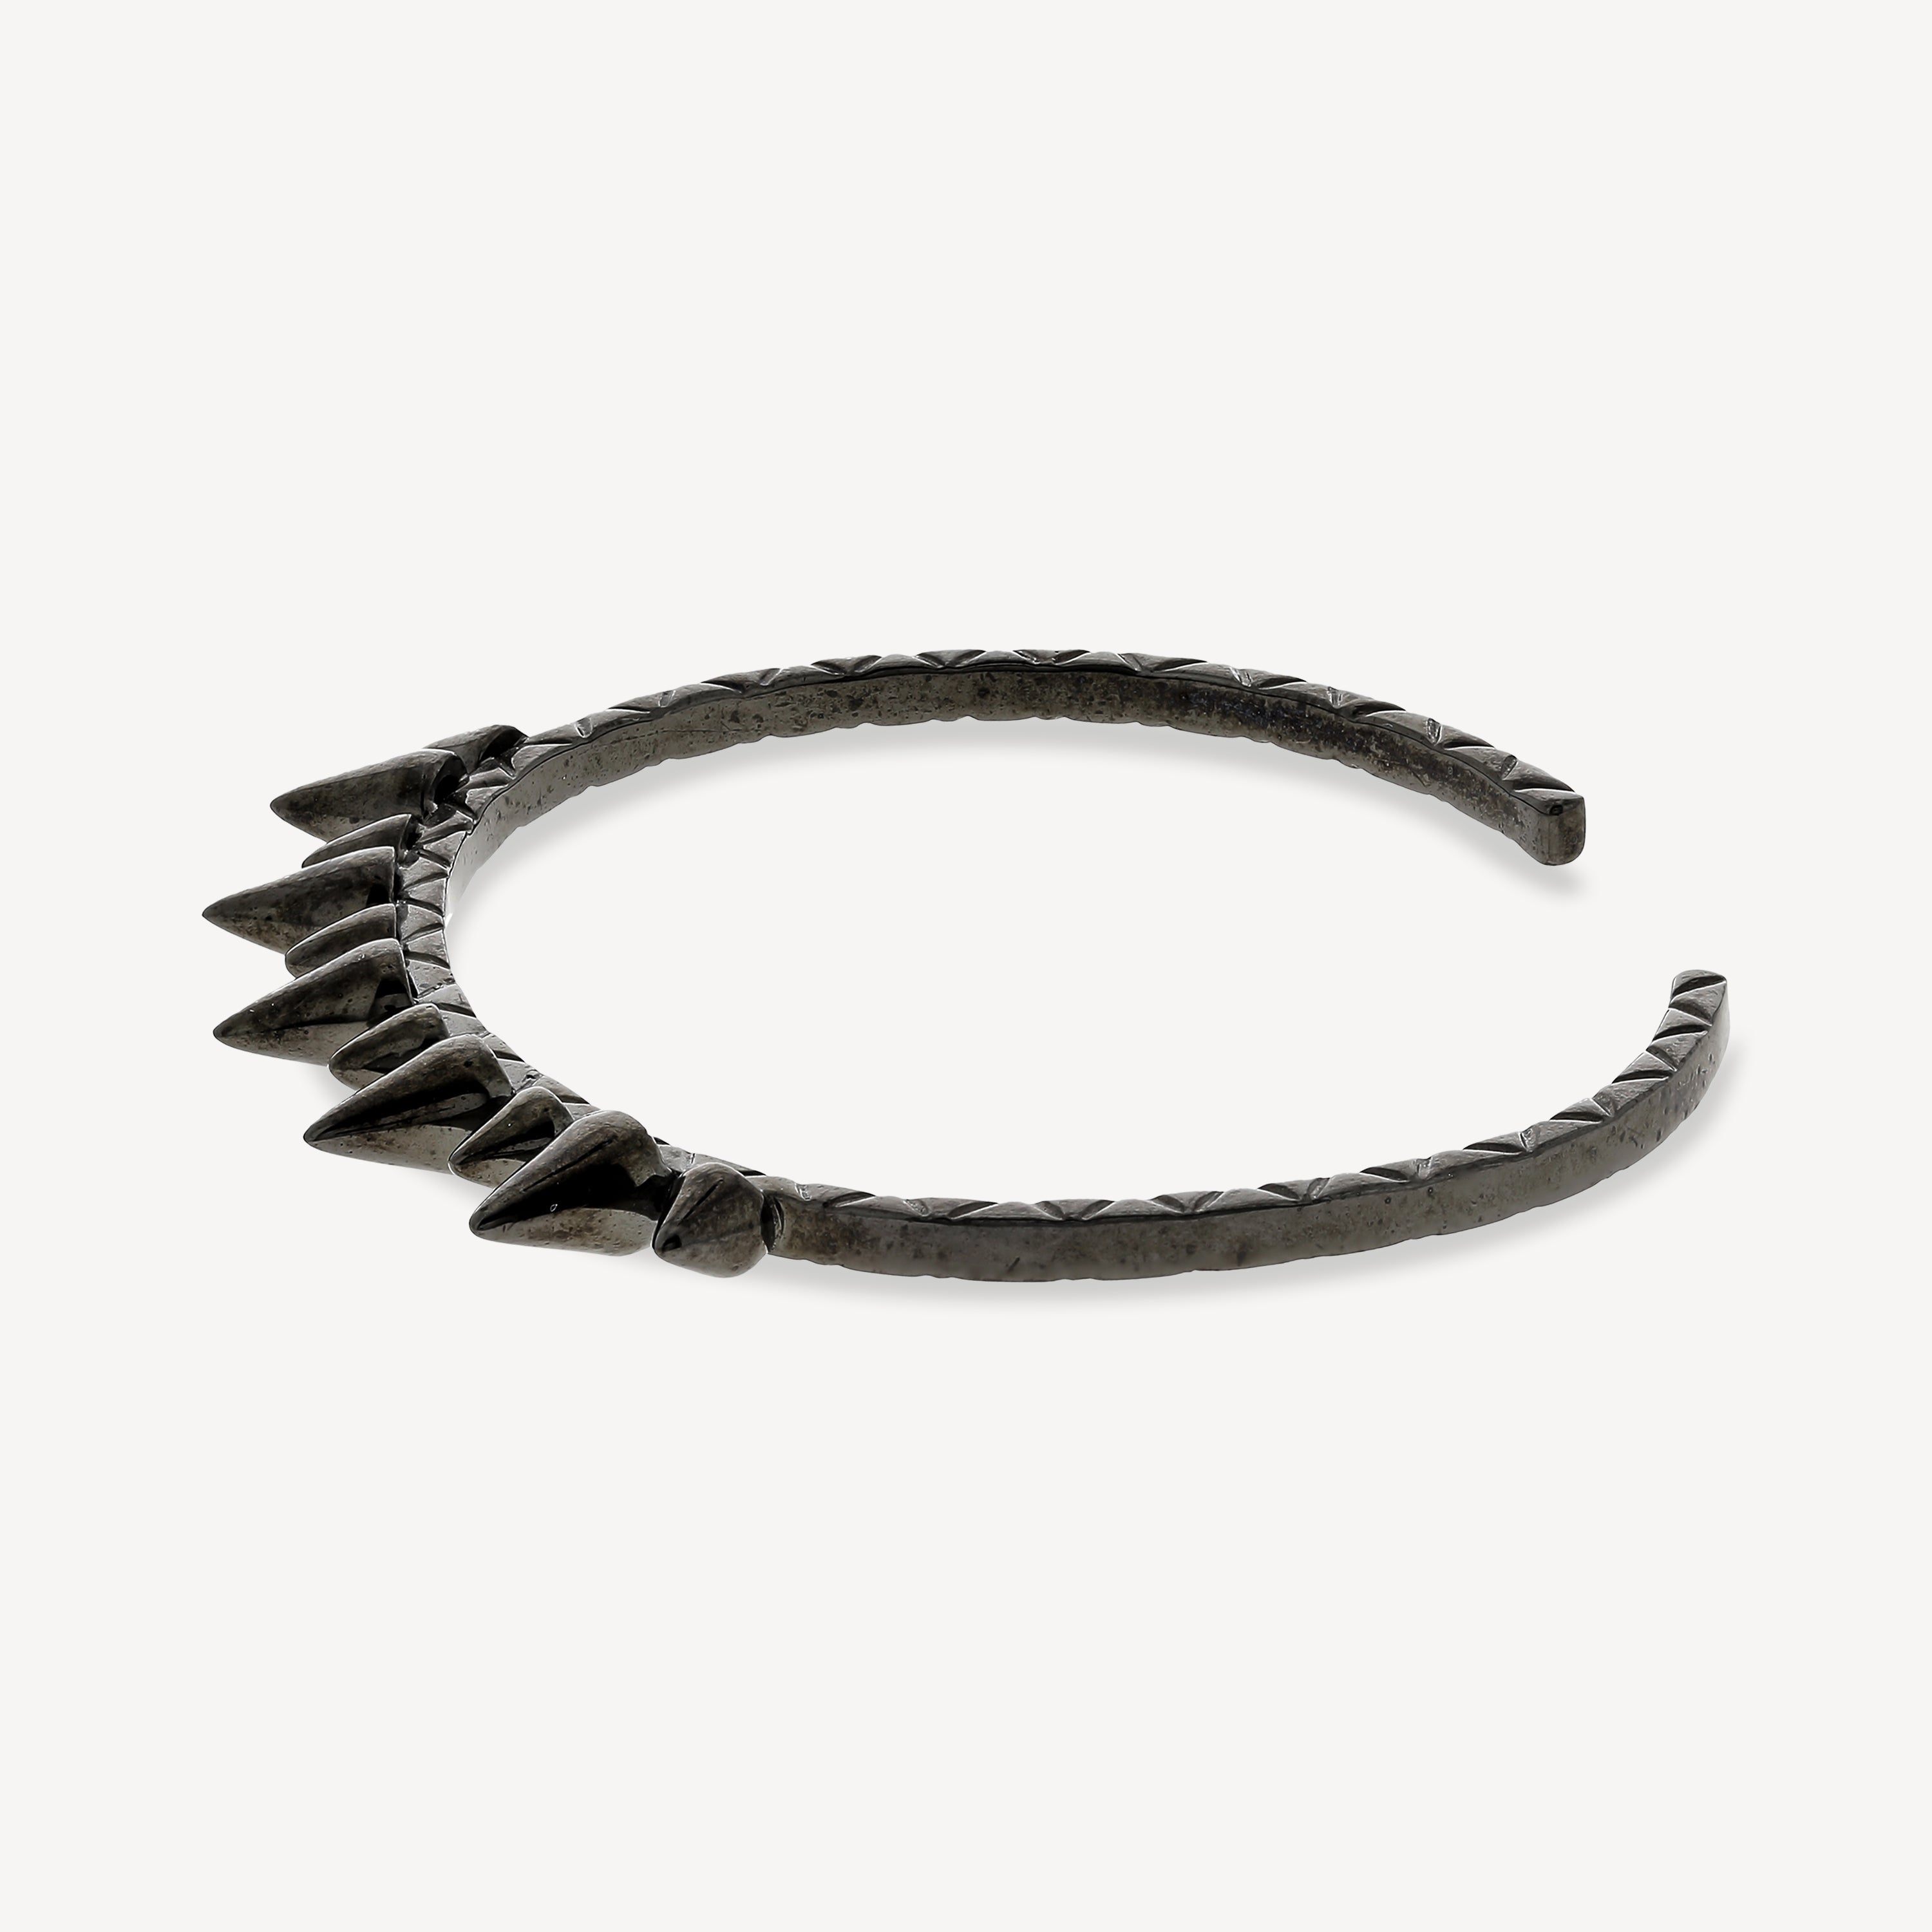 Spike Bracelet with Black Cord